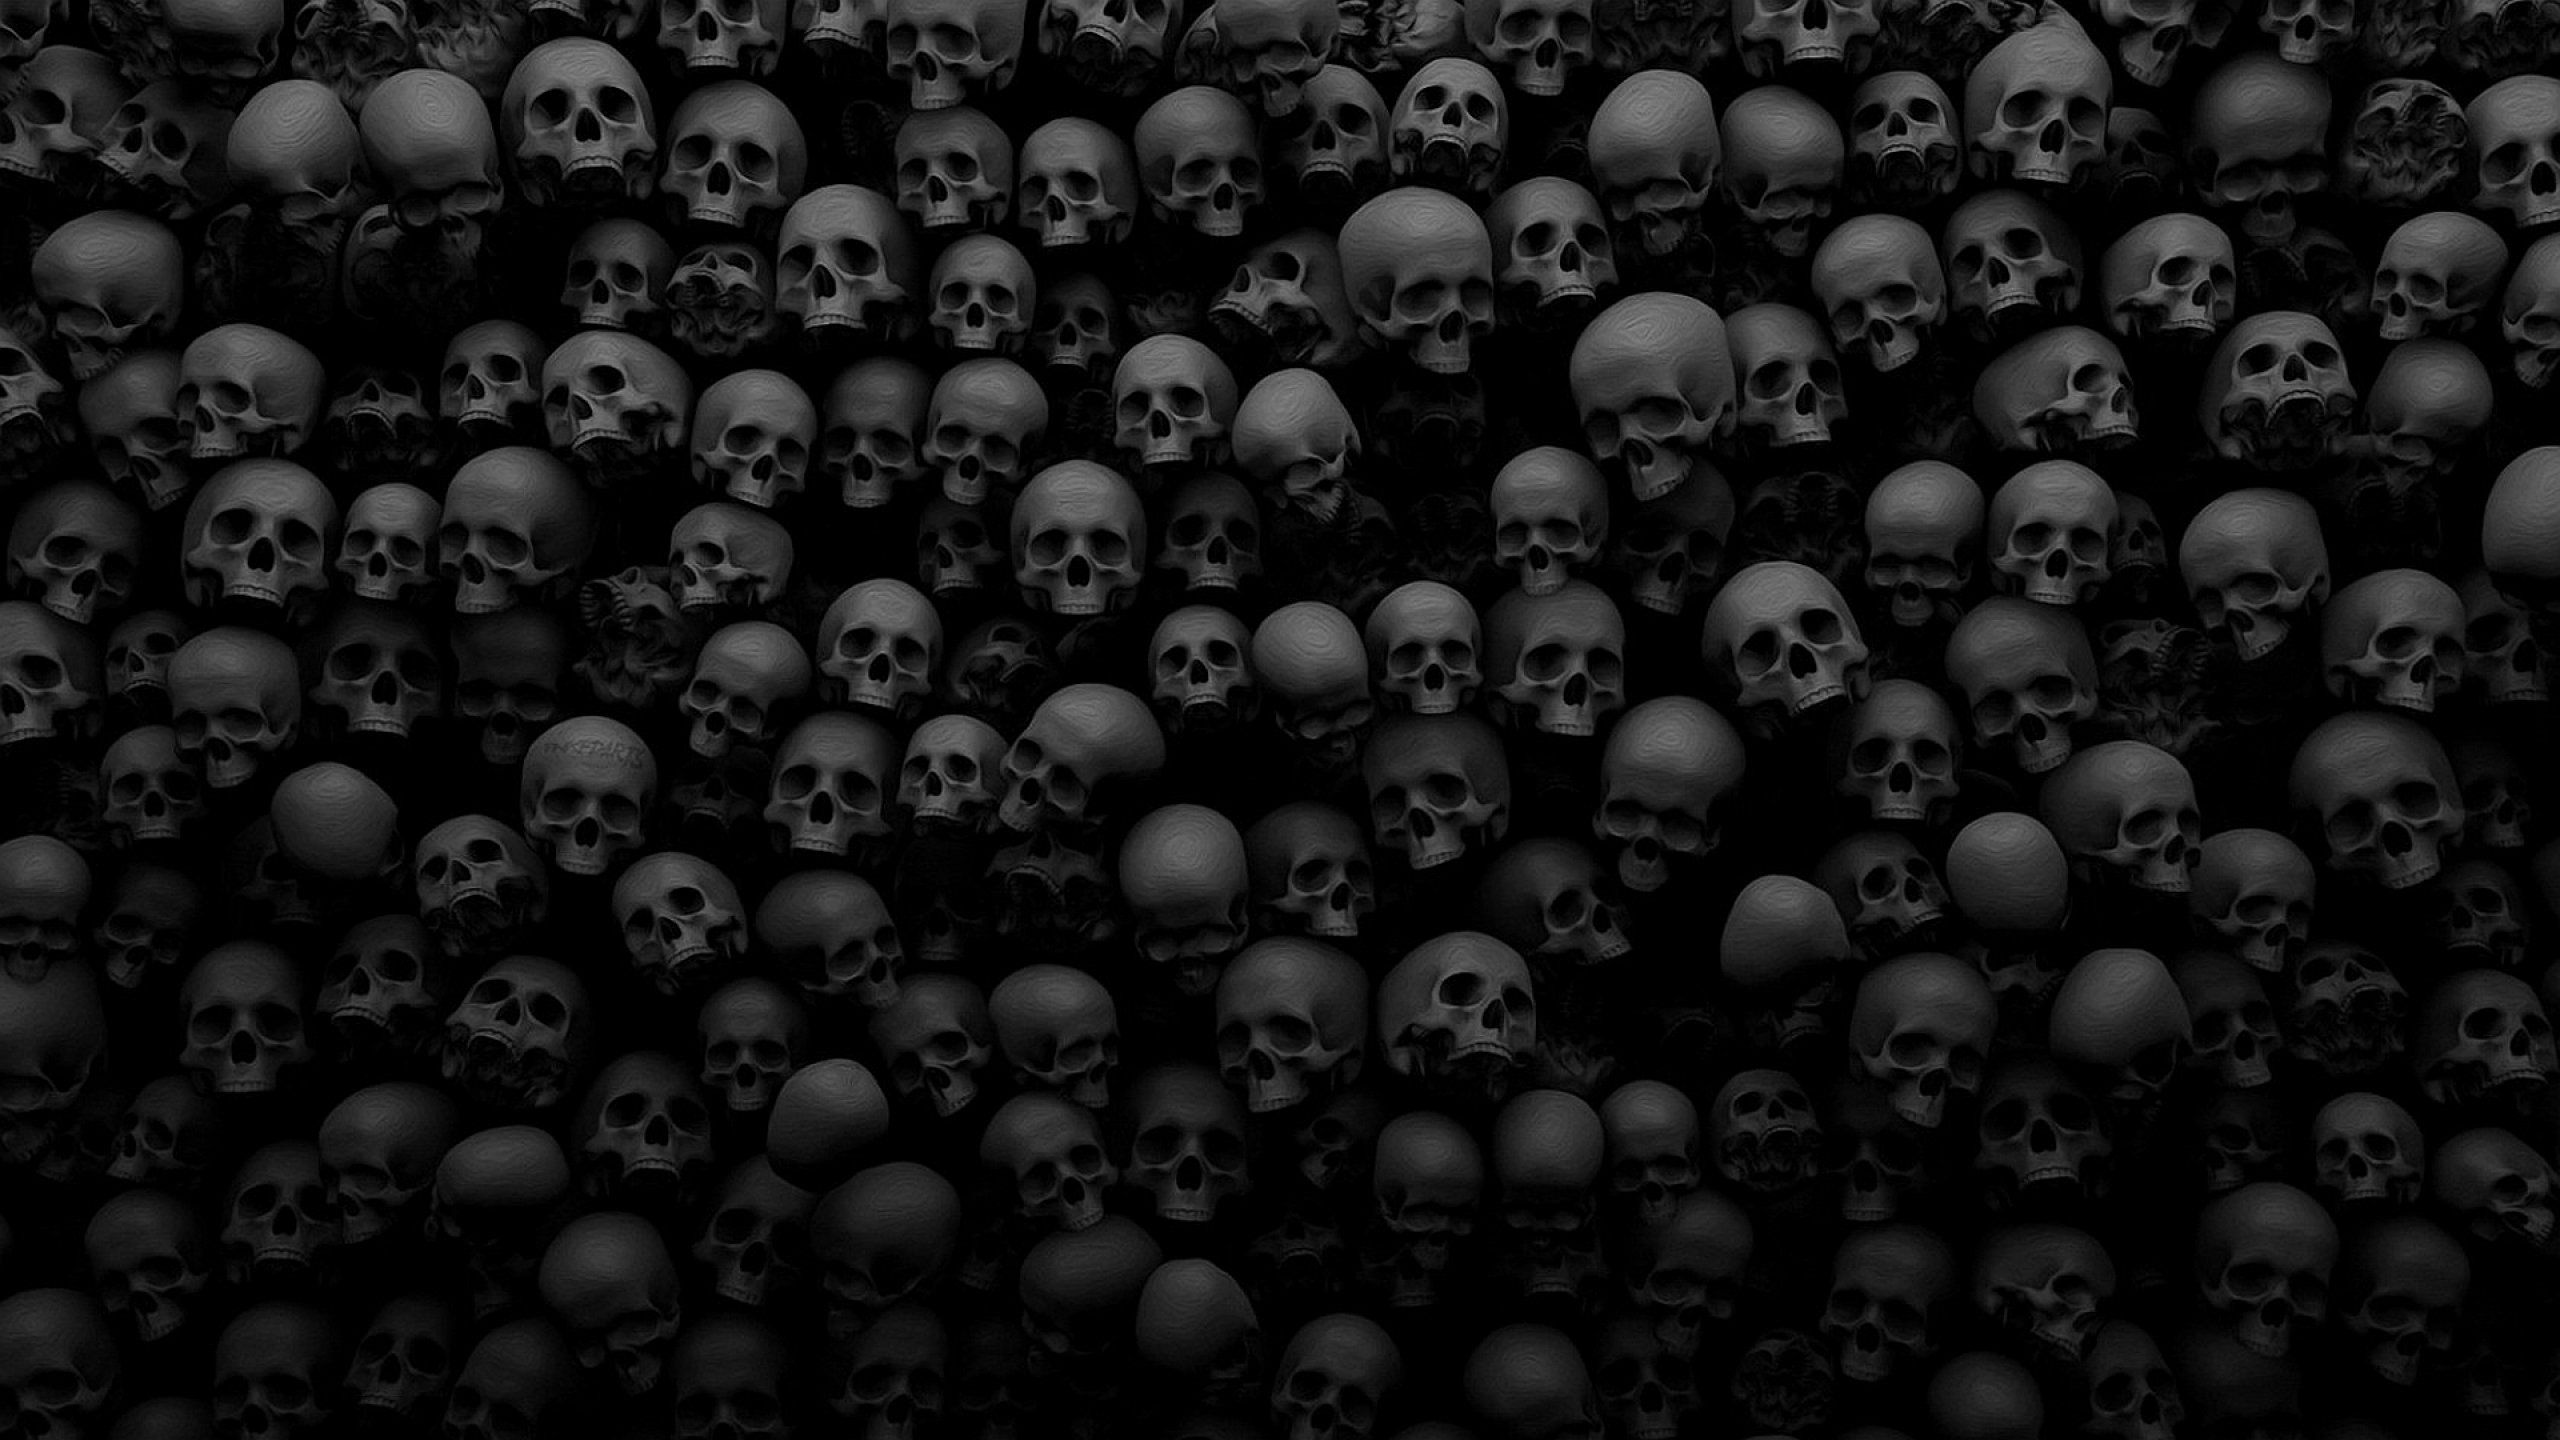 DARK evil horror spooky creepy scary wallpaper | 2560x1440 ...